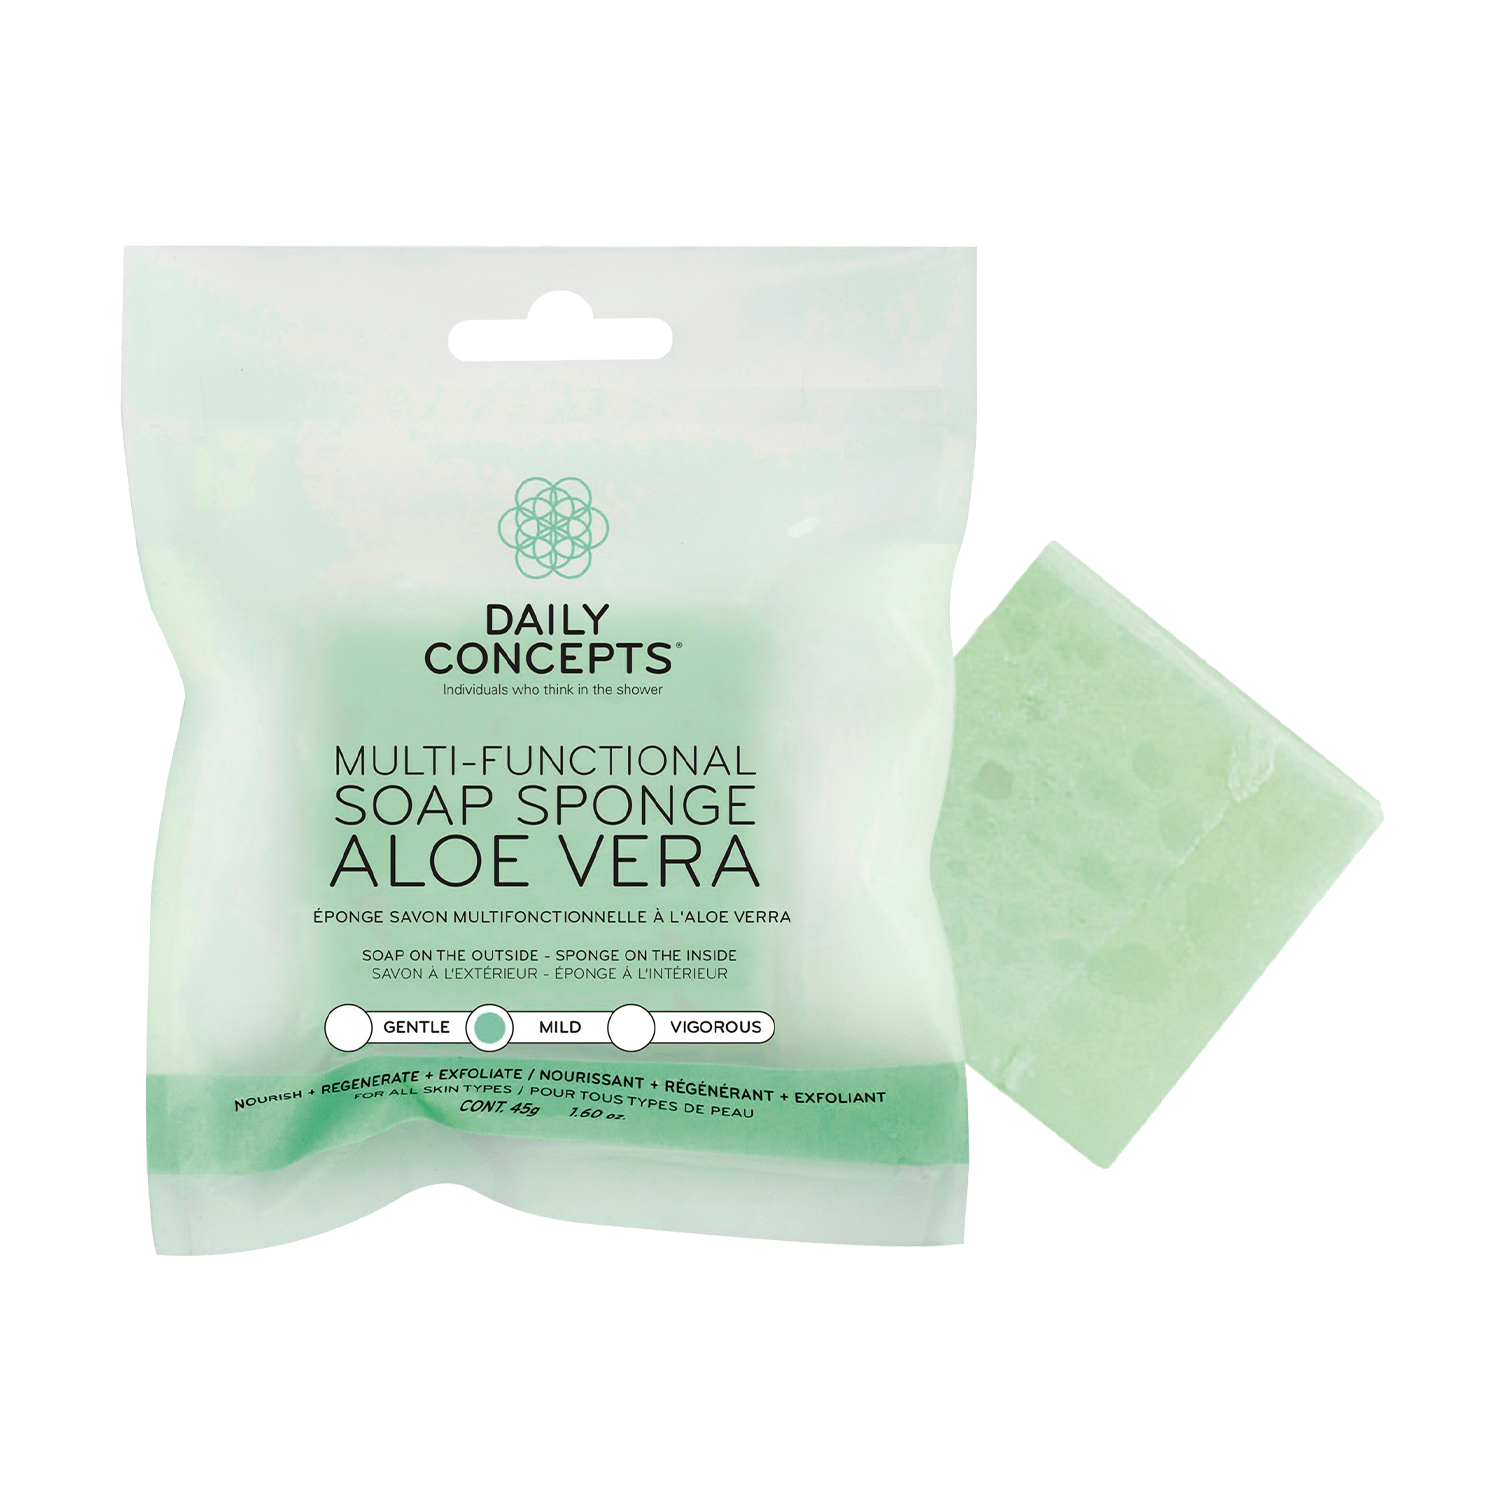 Daily Concepts Multi-Functional Soap Sponge Aloe Vera Daily Concepts Multi-Functional Soap Sponge Aloe Vera 1